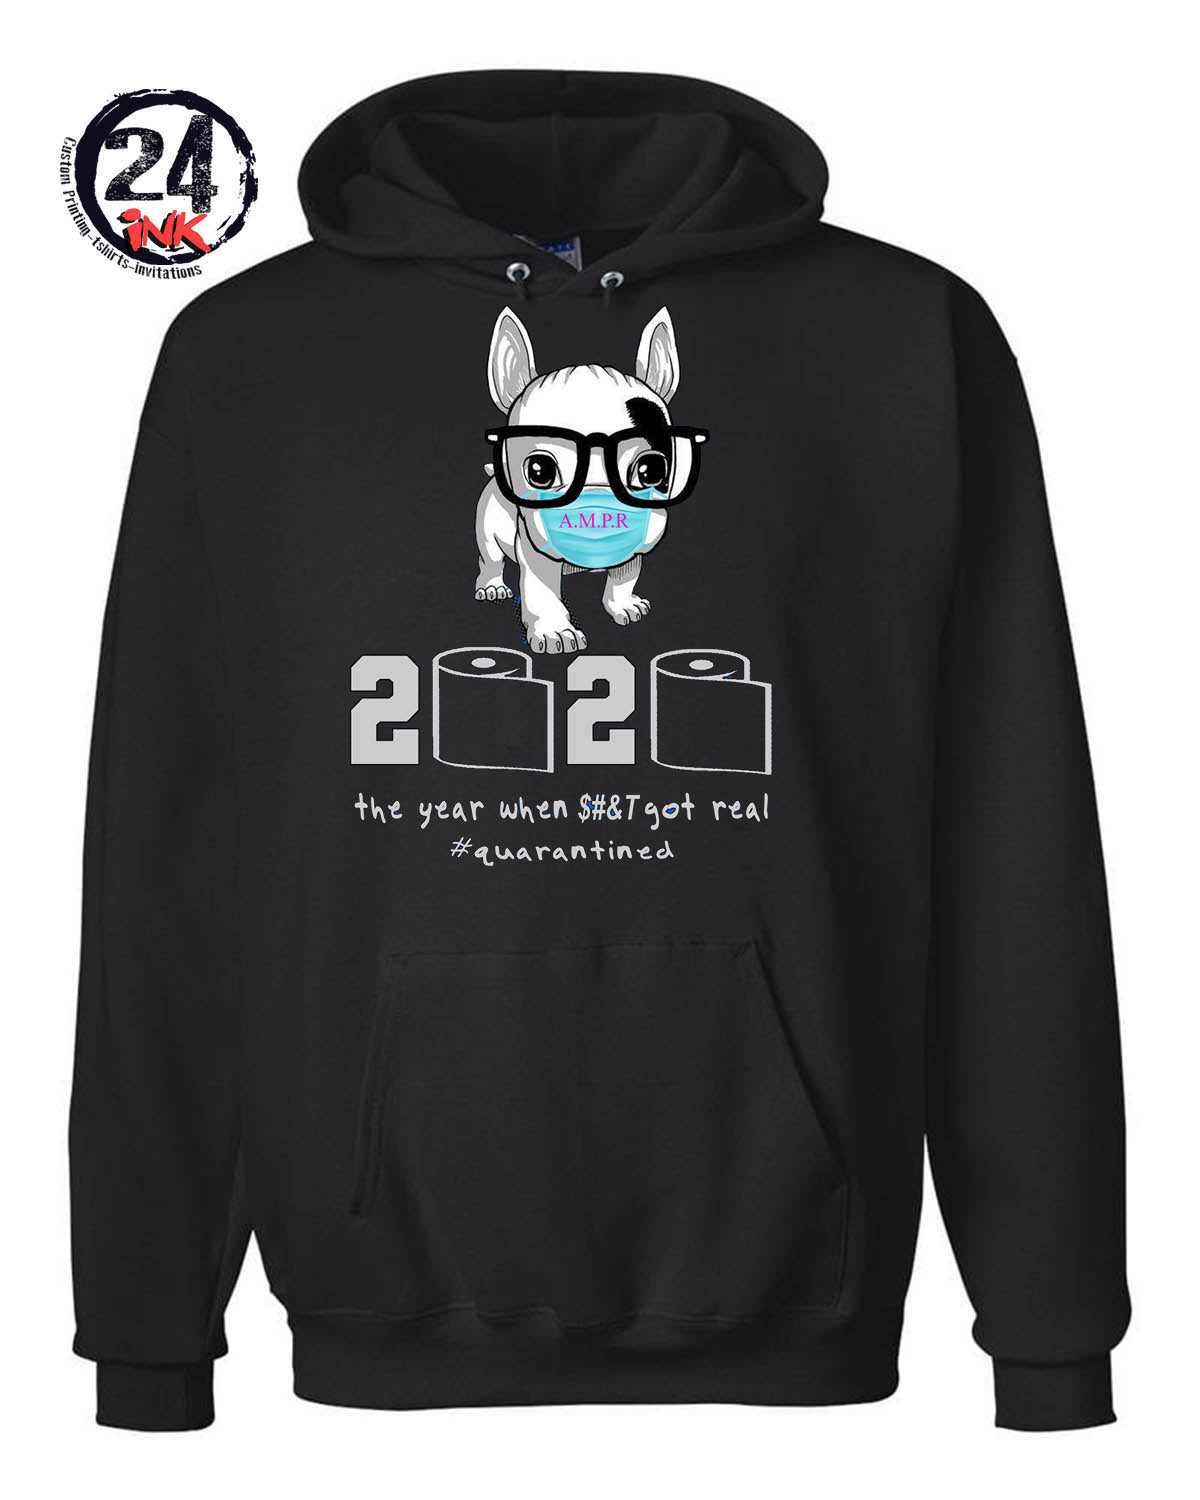 AMPR 2020 Hooded Sweatshirt